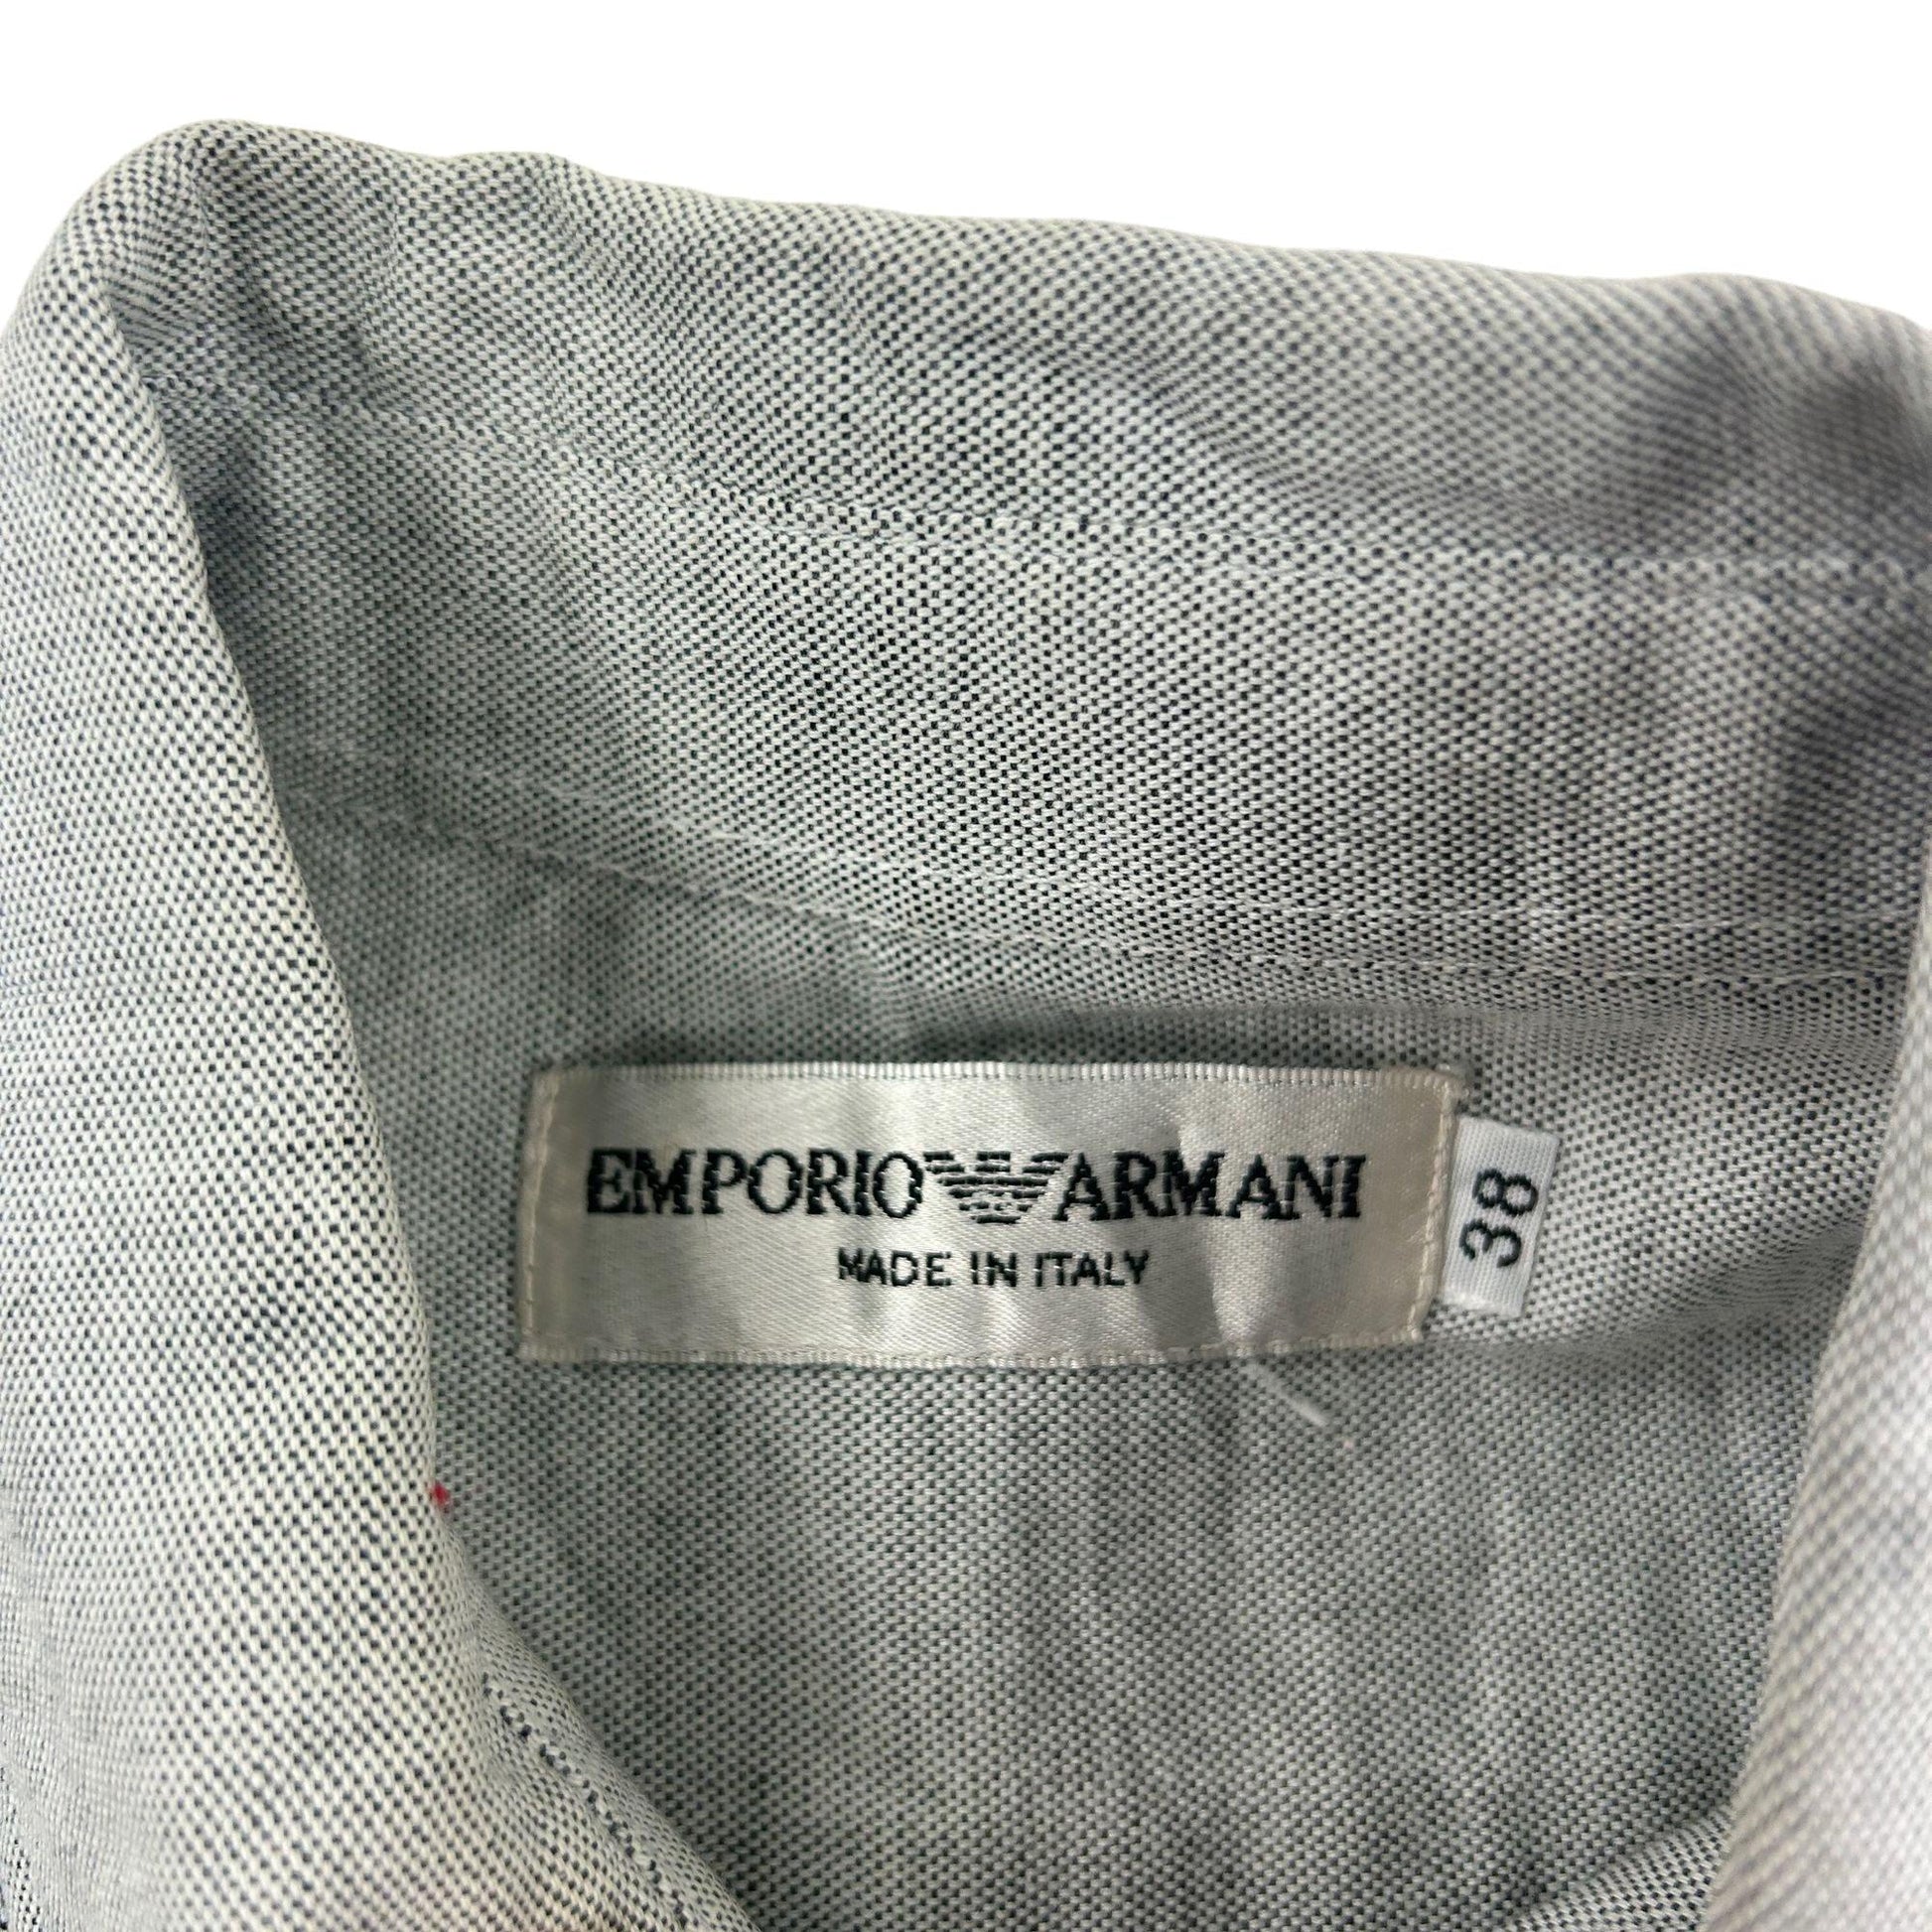 Vintage Emporio Armani Shirt Size M - Known Source